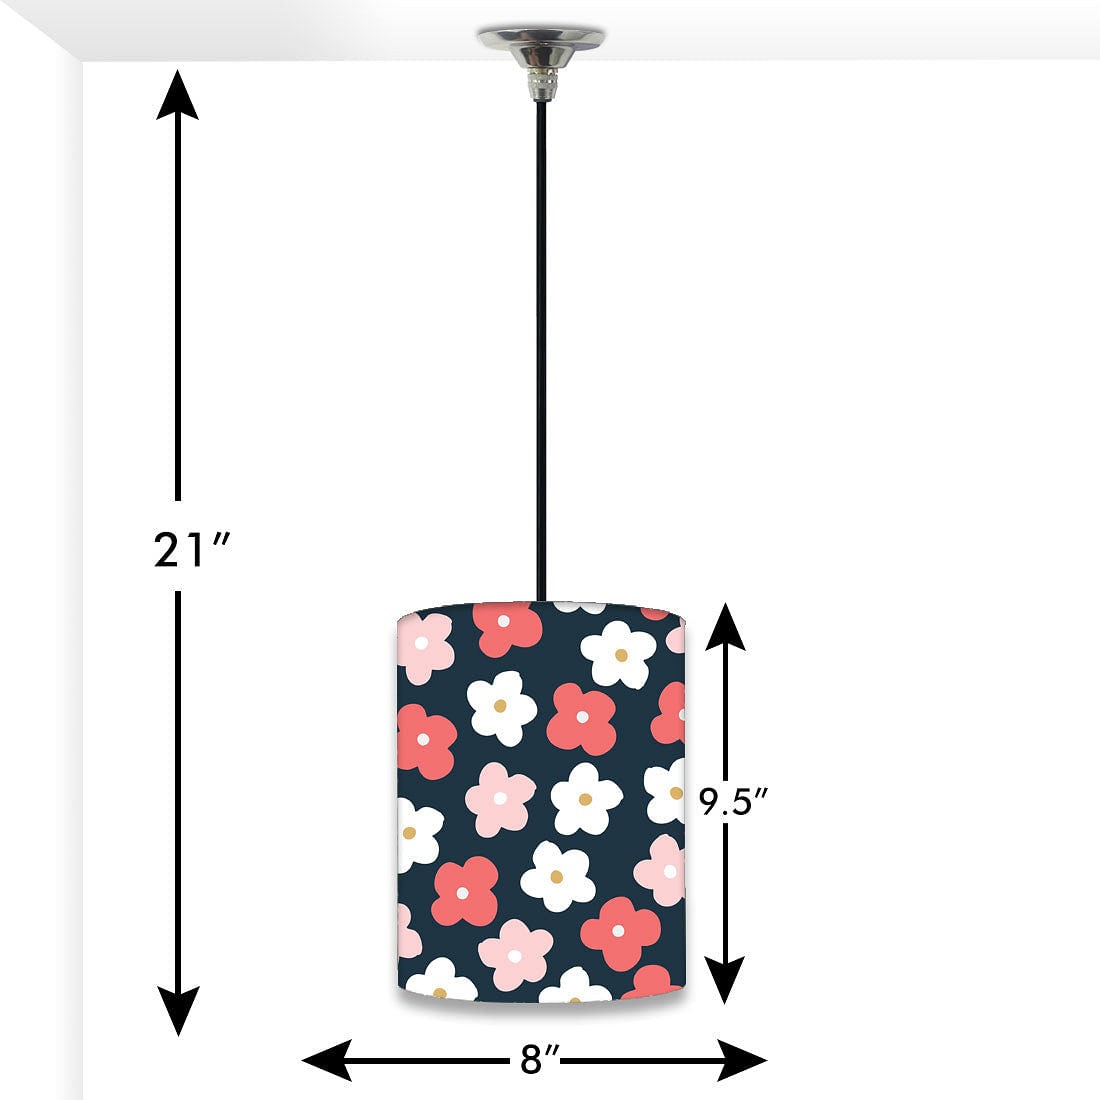 Ceiling Light Fixture Light Lamps for Bedroom - 0040 Nutcase